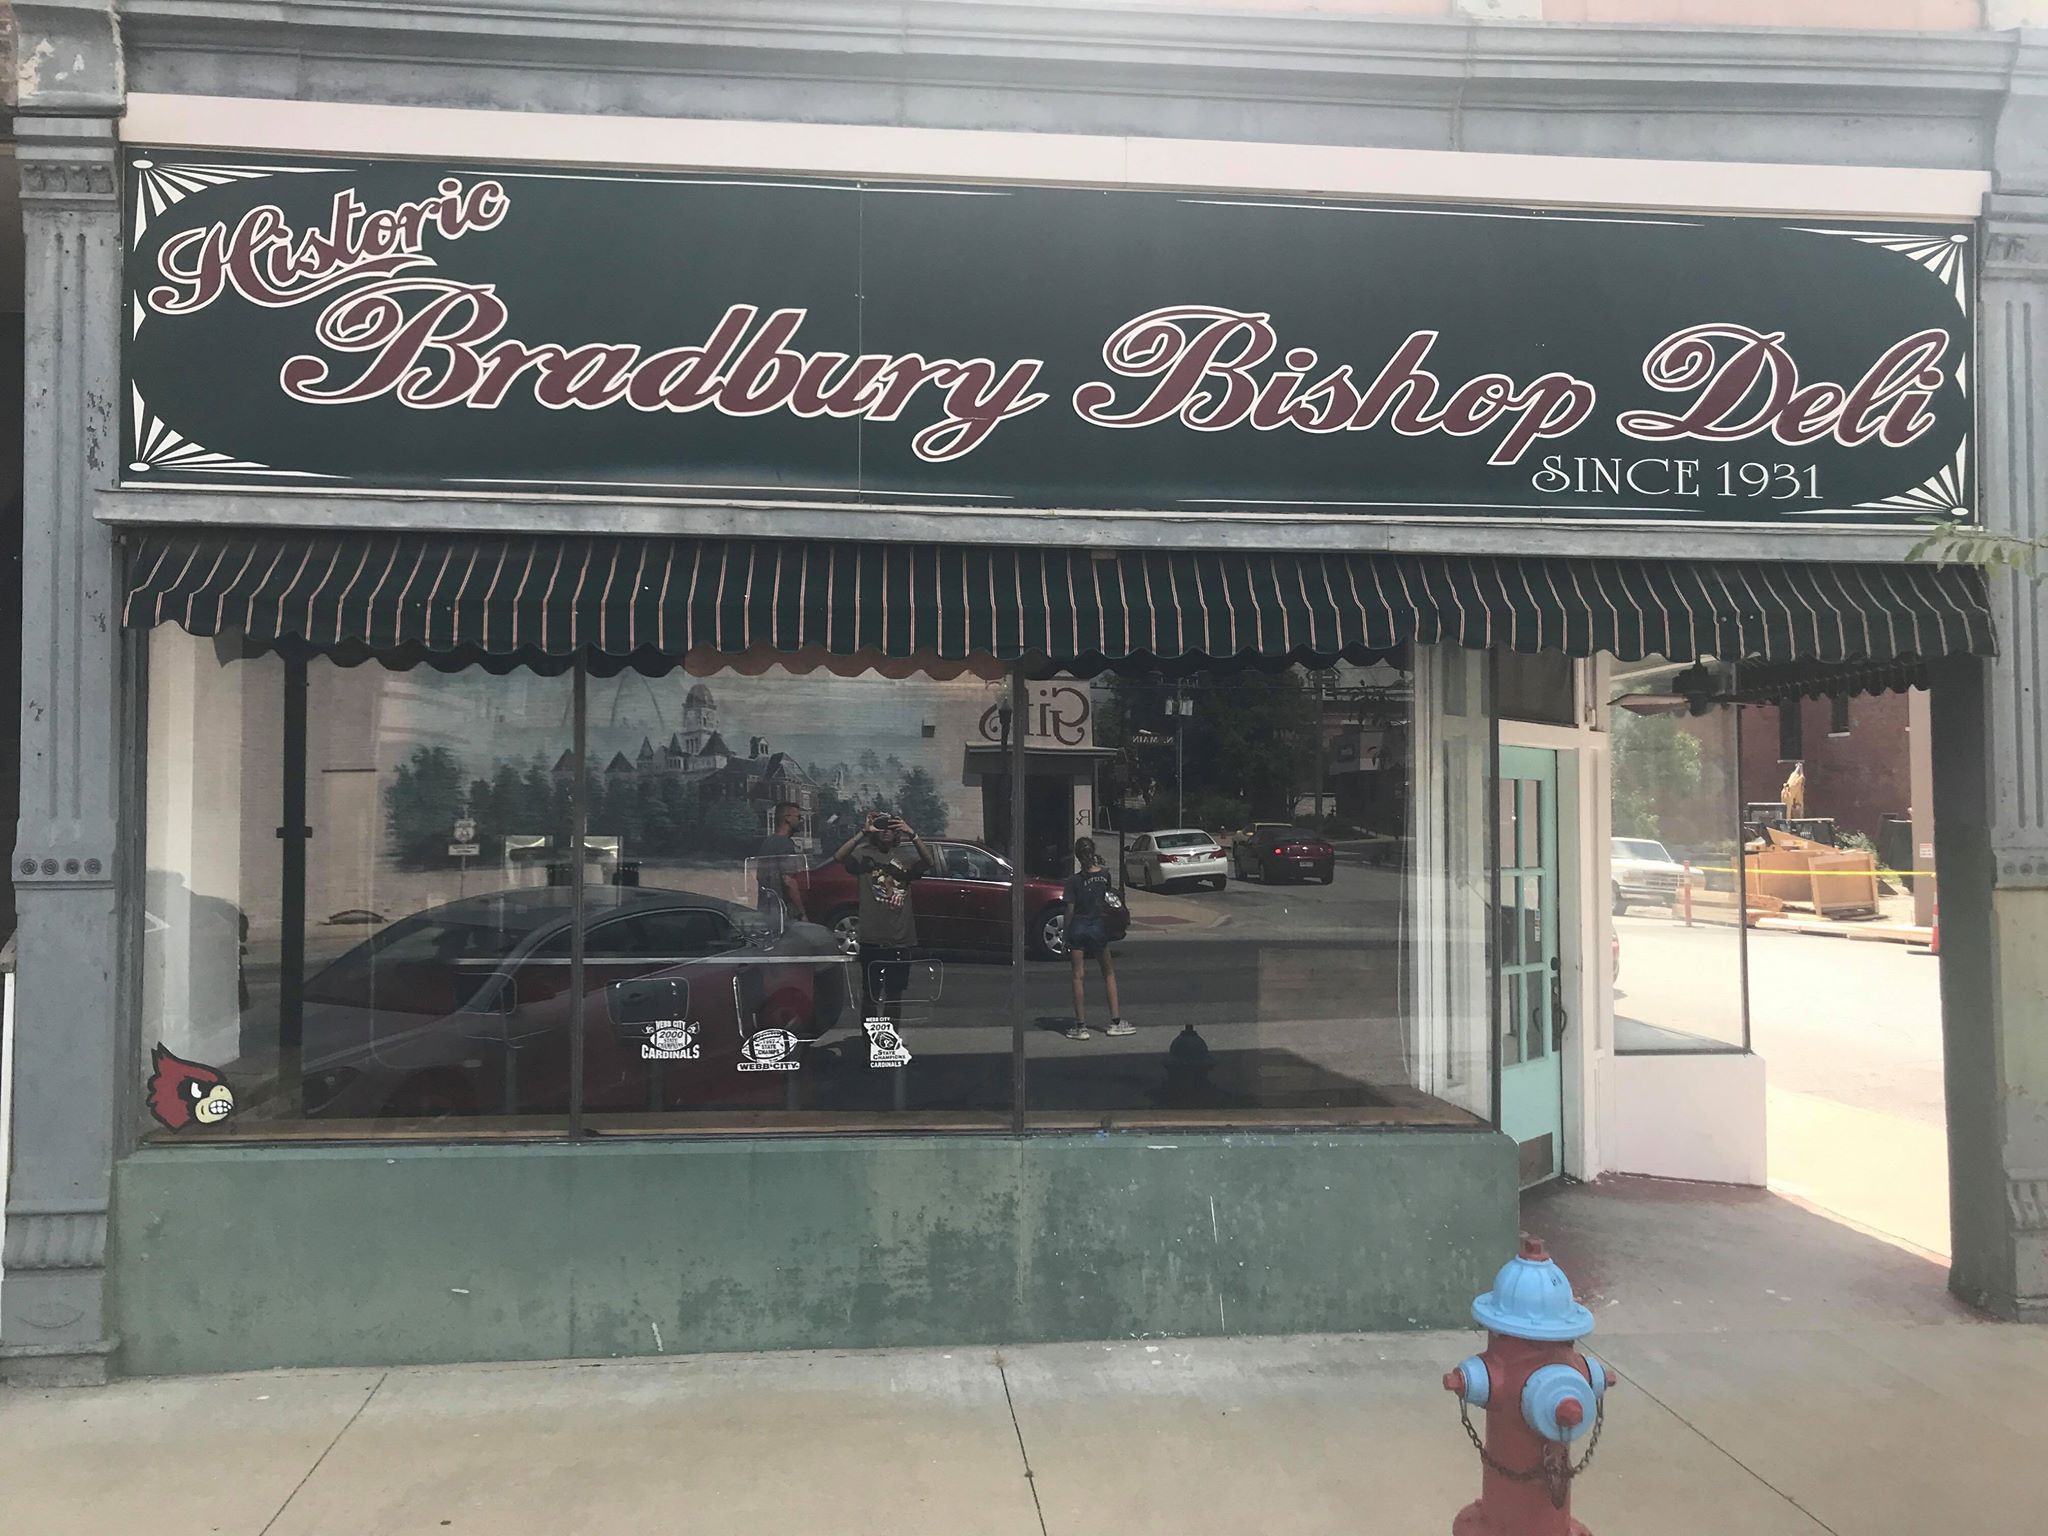 Bradbury Bishop Deli and Route 66 Diner